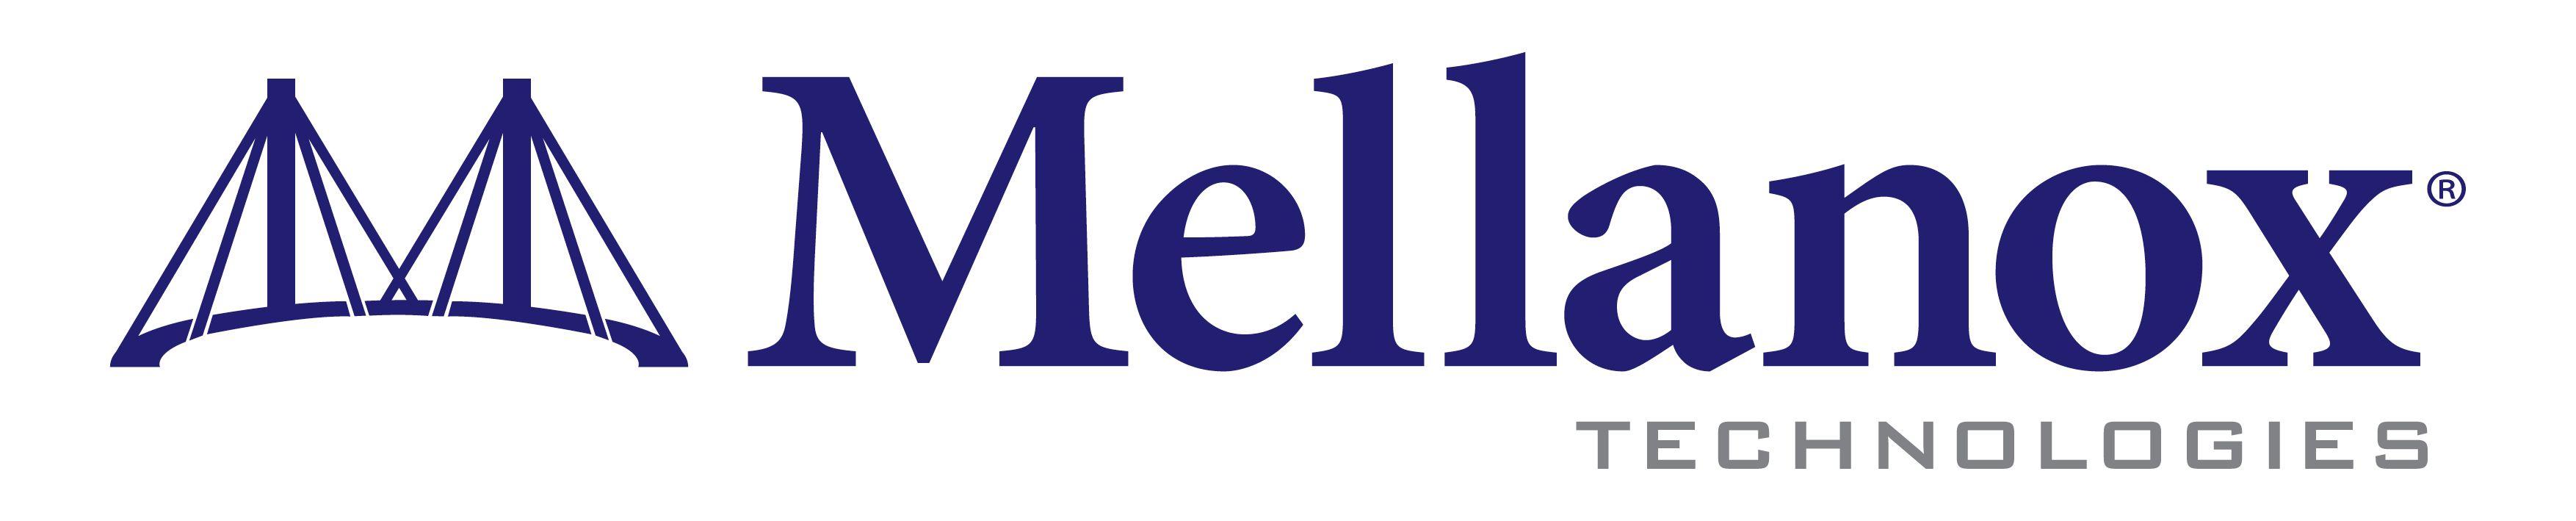 Mellanox Logo - Mellanox Technologies: Media Kit